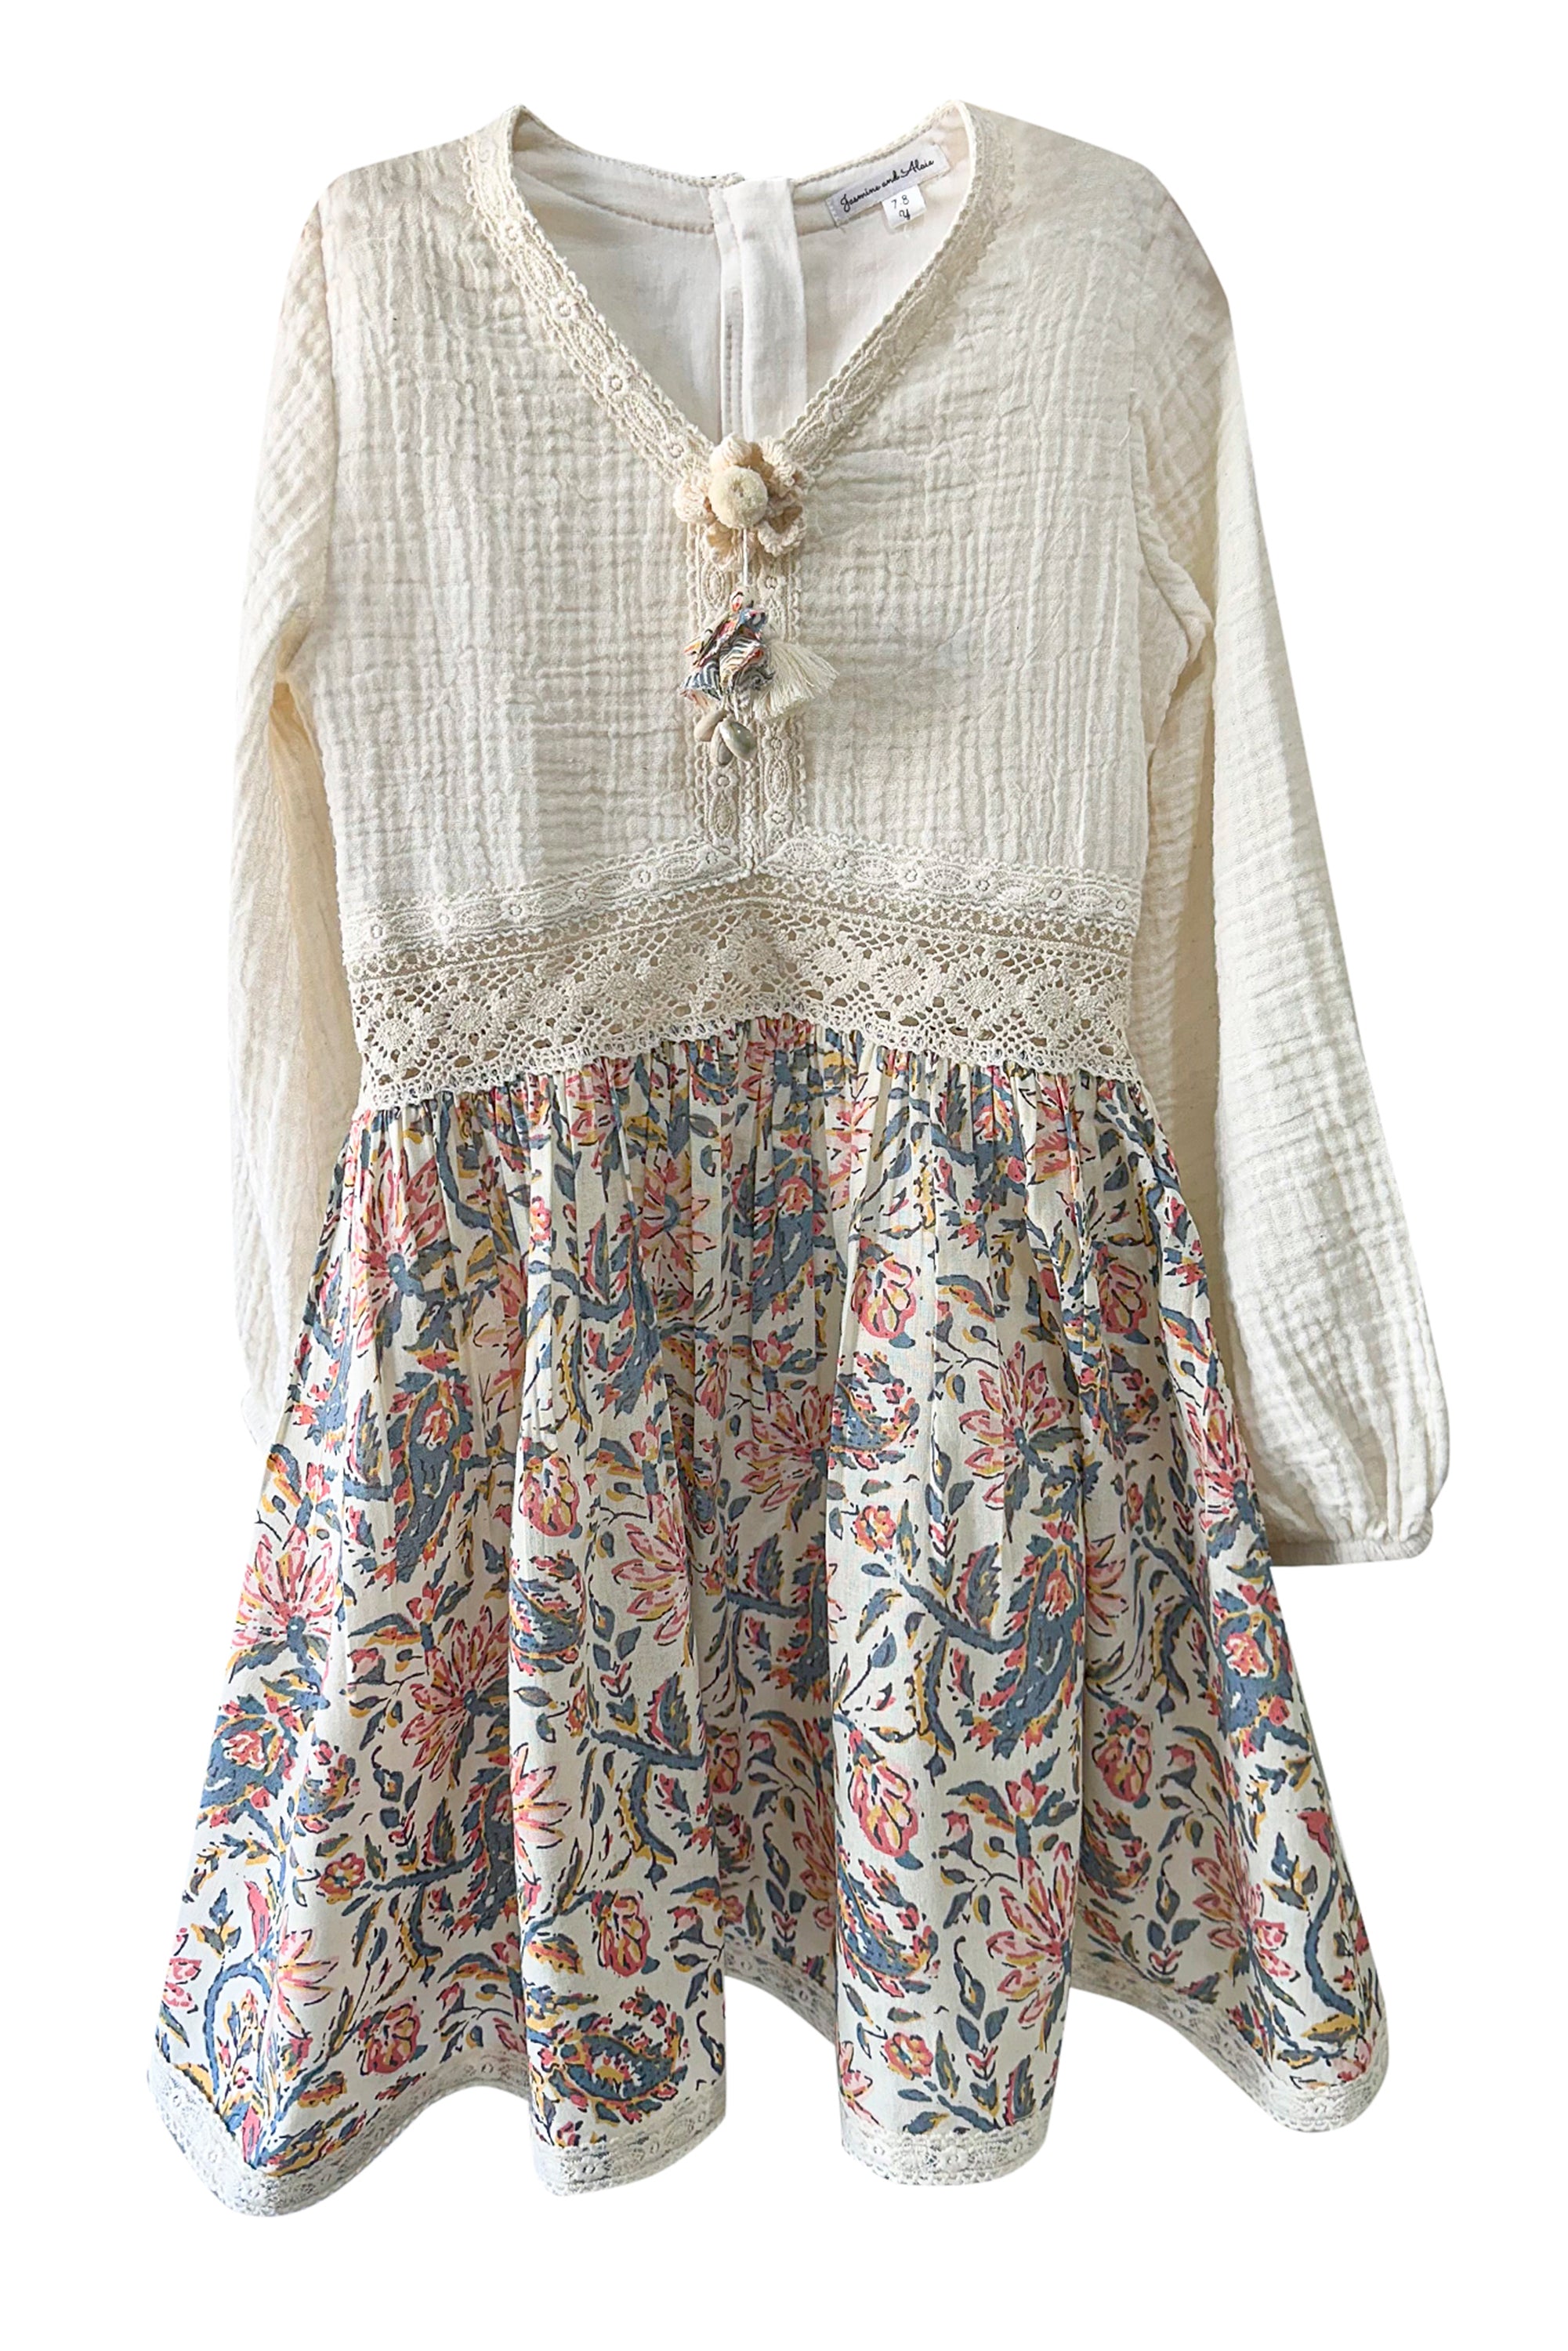 Printed Skirt Cotton Dress